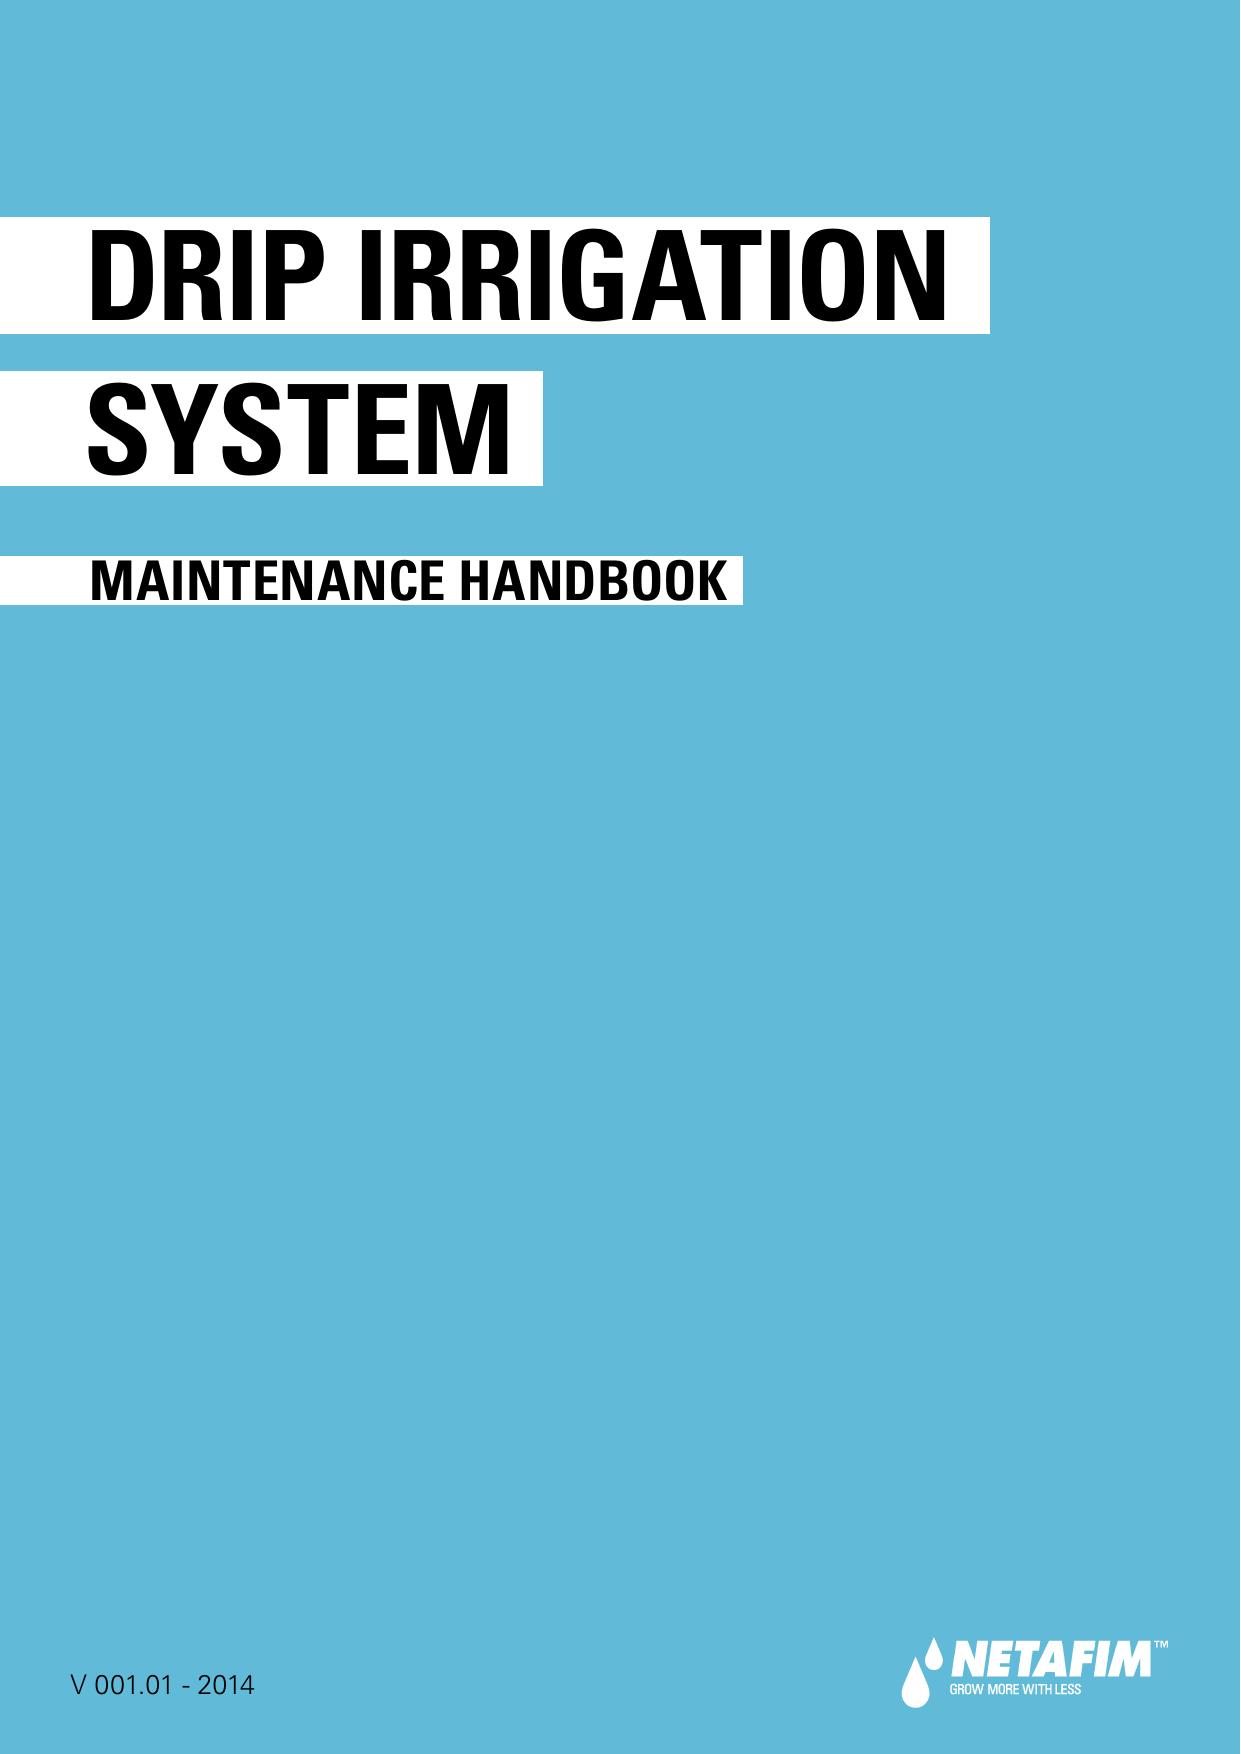 DRIP IRRIGATION SYSTEM - Micro irrigation